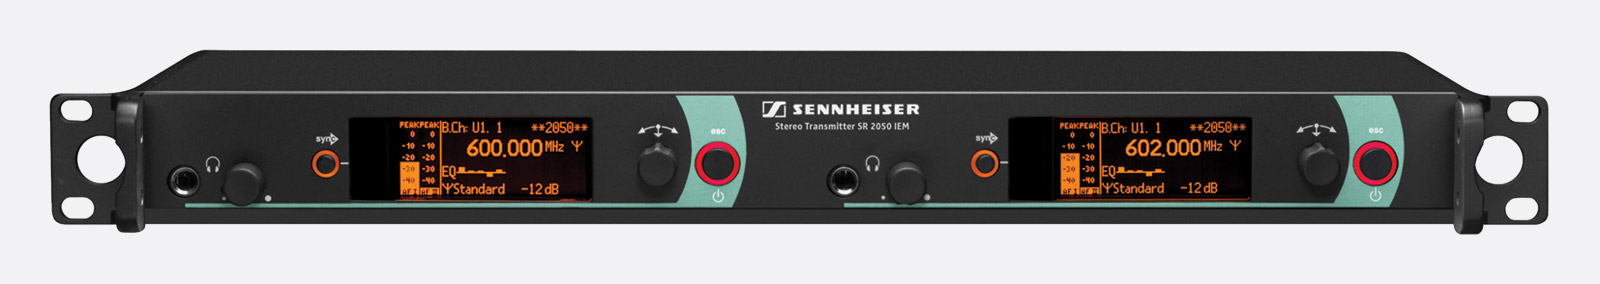 Sennheiser SR 2050 IEM 2ch Transmitter